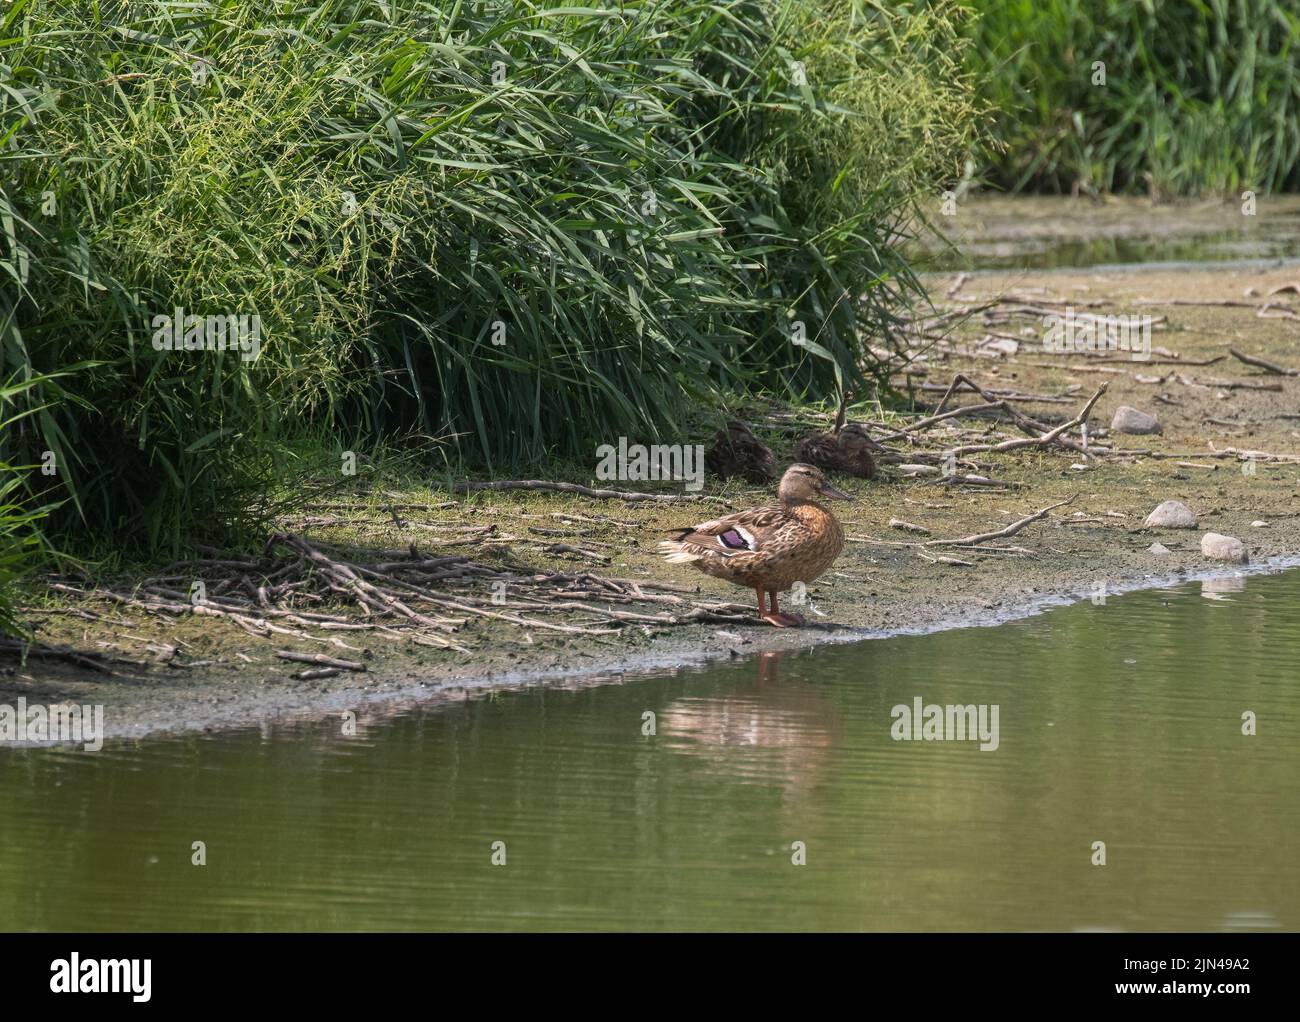 A female Mallard duck on the grassy shore of a pond Stock Photo